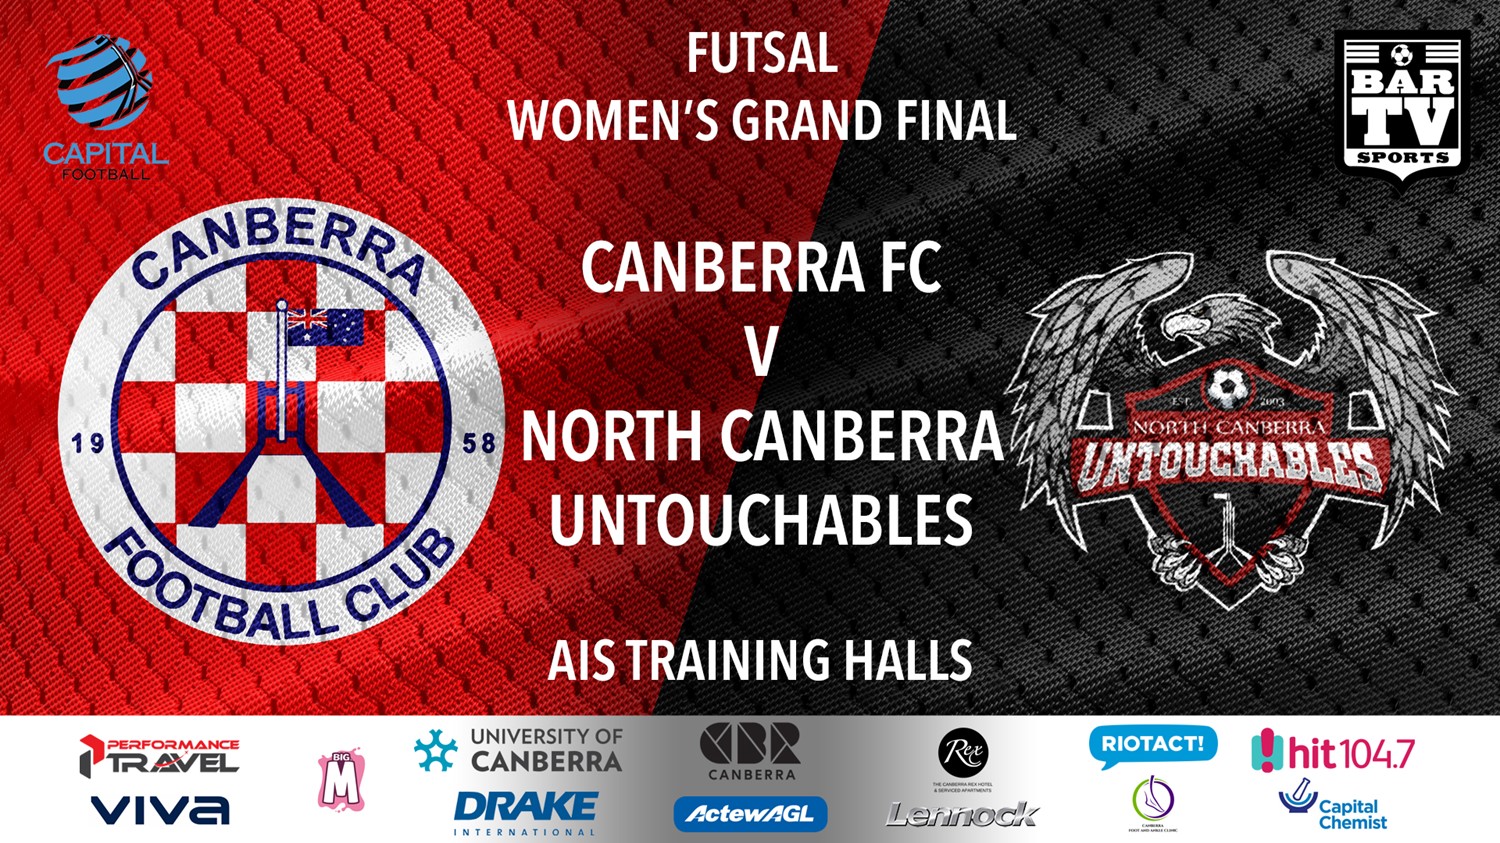 Capital Football Futsal Women's Grand Final - Canberra FC v North Canberra Untouchables Slate Image